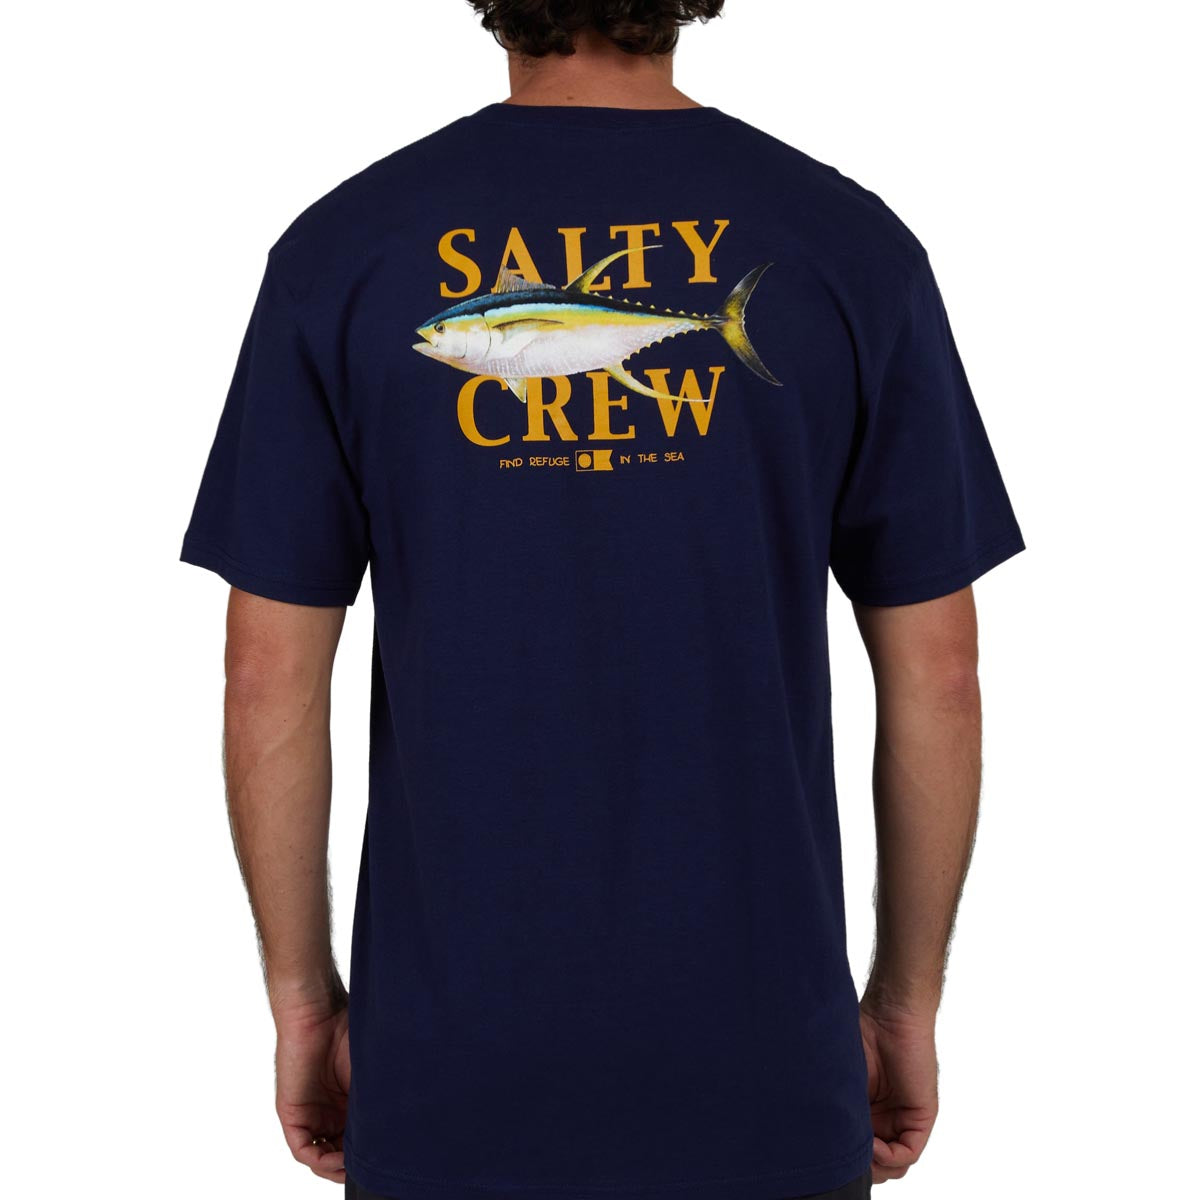 Salty Crew Yellowfin Classic T-Shirt - Navy image 2